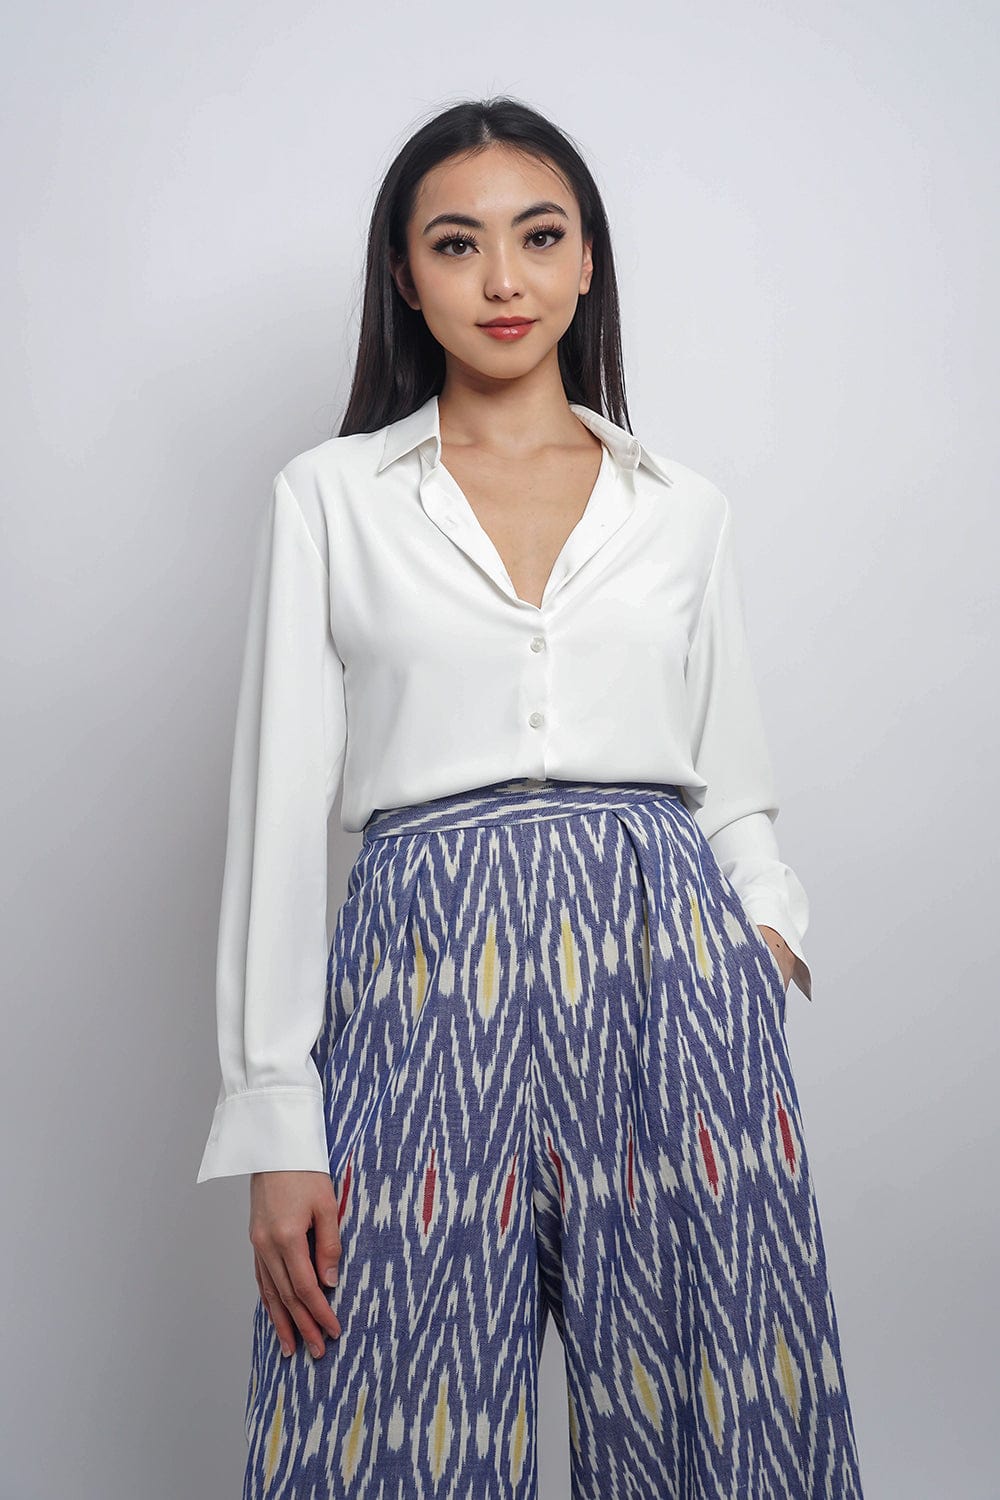 Chloe Dao TOPS White Button Up Jennifer Dress Shirt